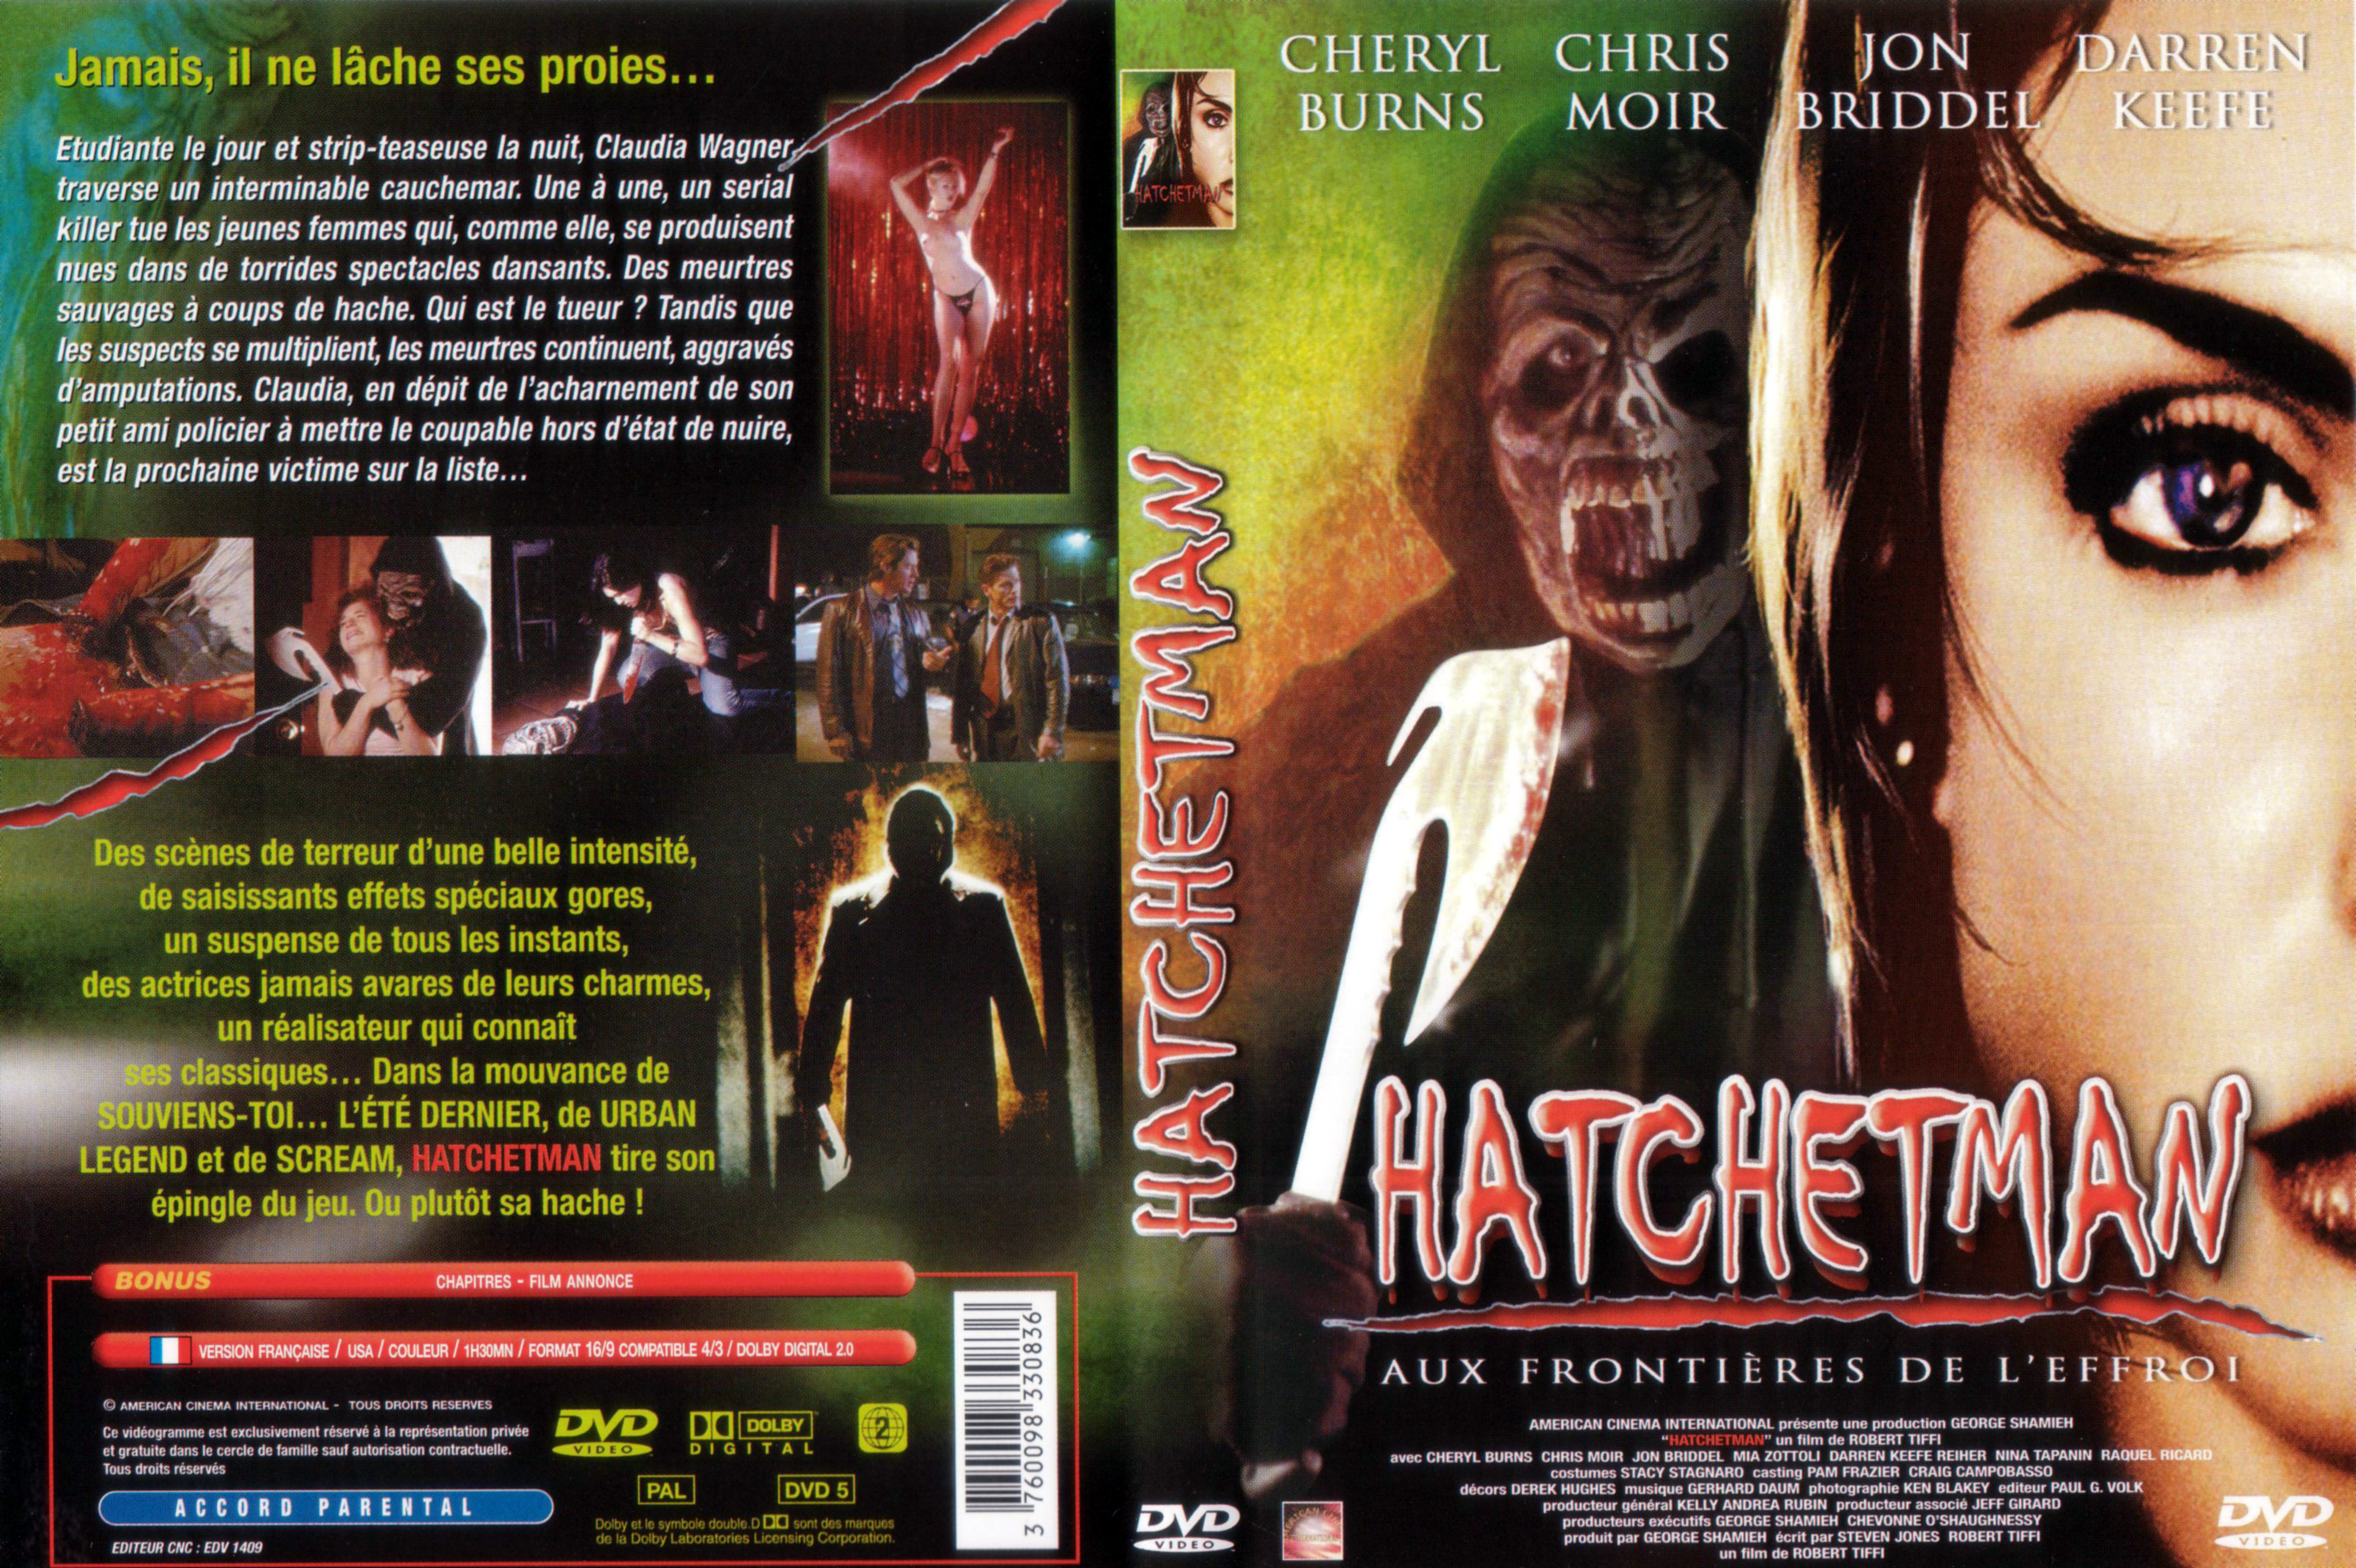 Jaquette DVD Hatchetman v3